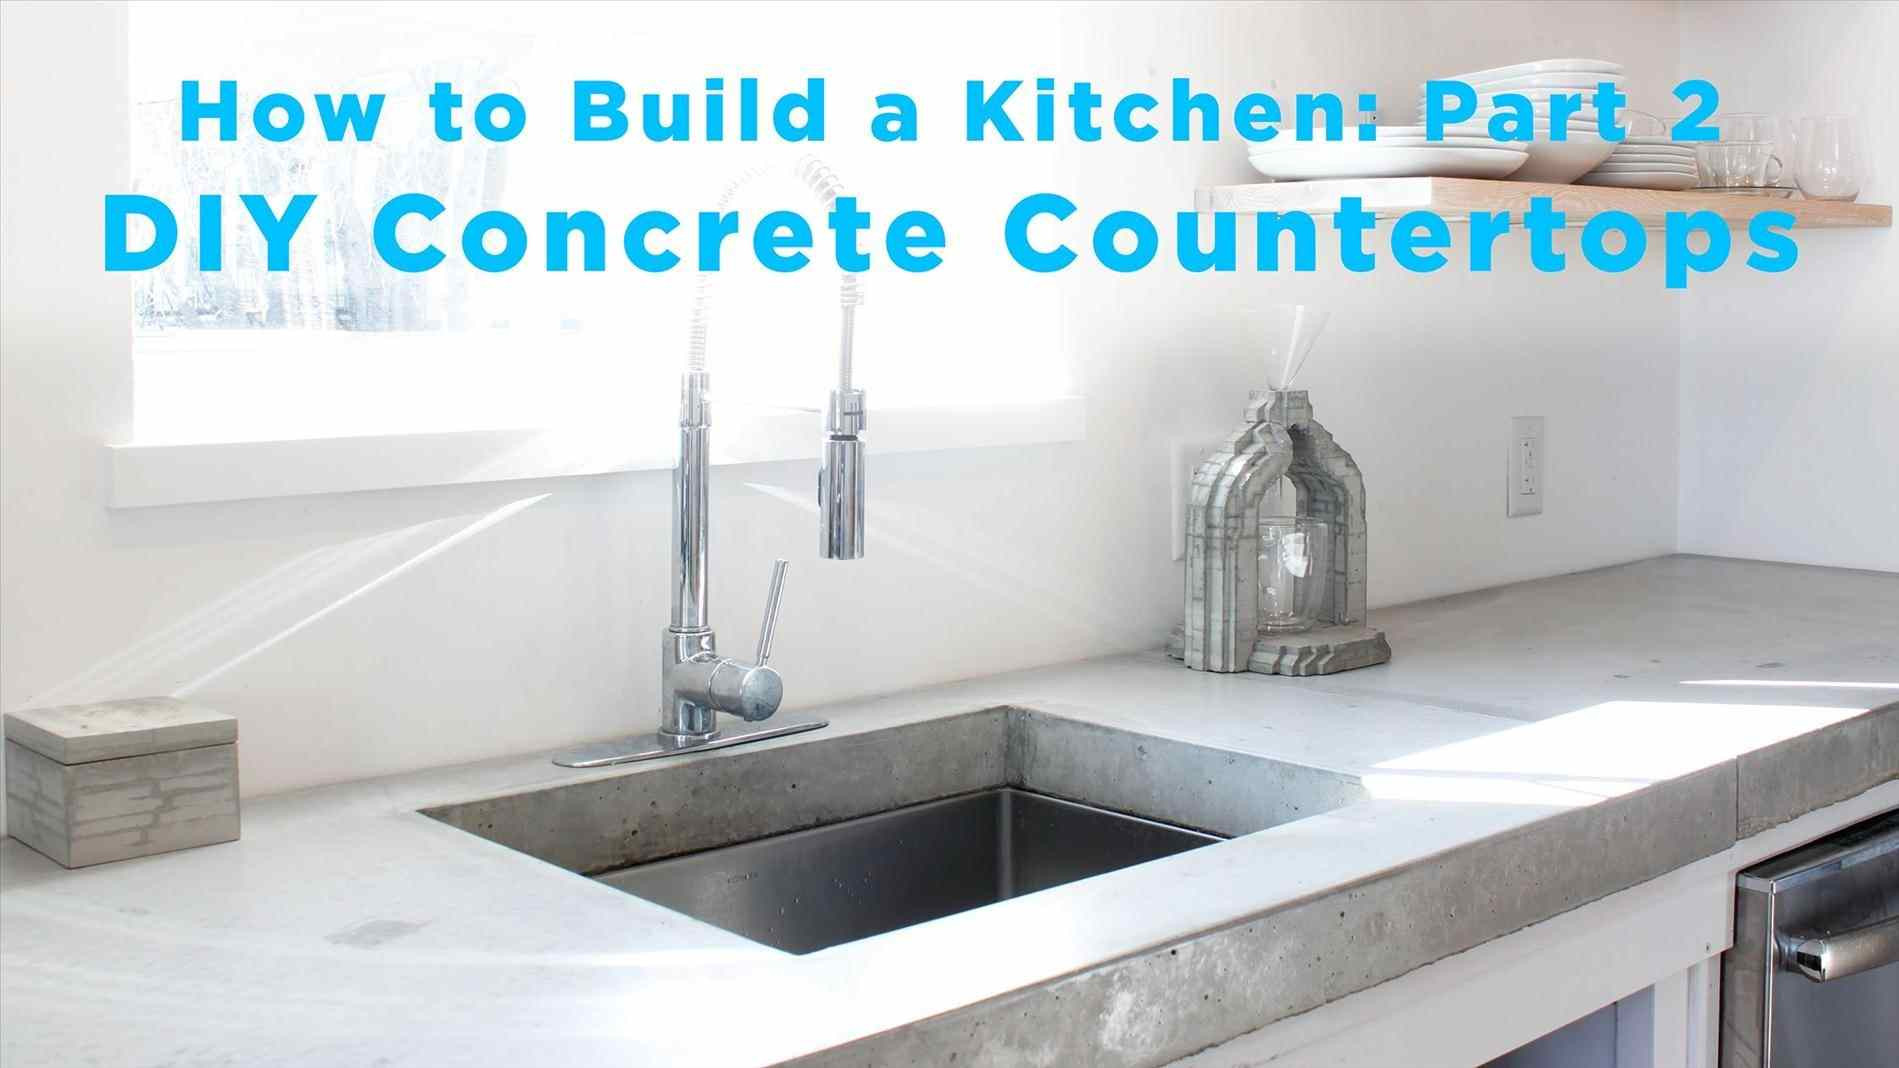 DIY Concrete Countertop Kits
 do it yourself concrete countertop kits